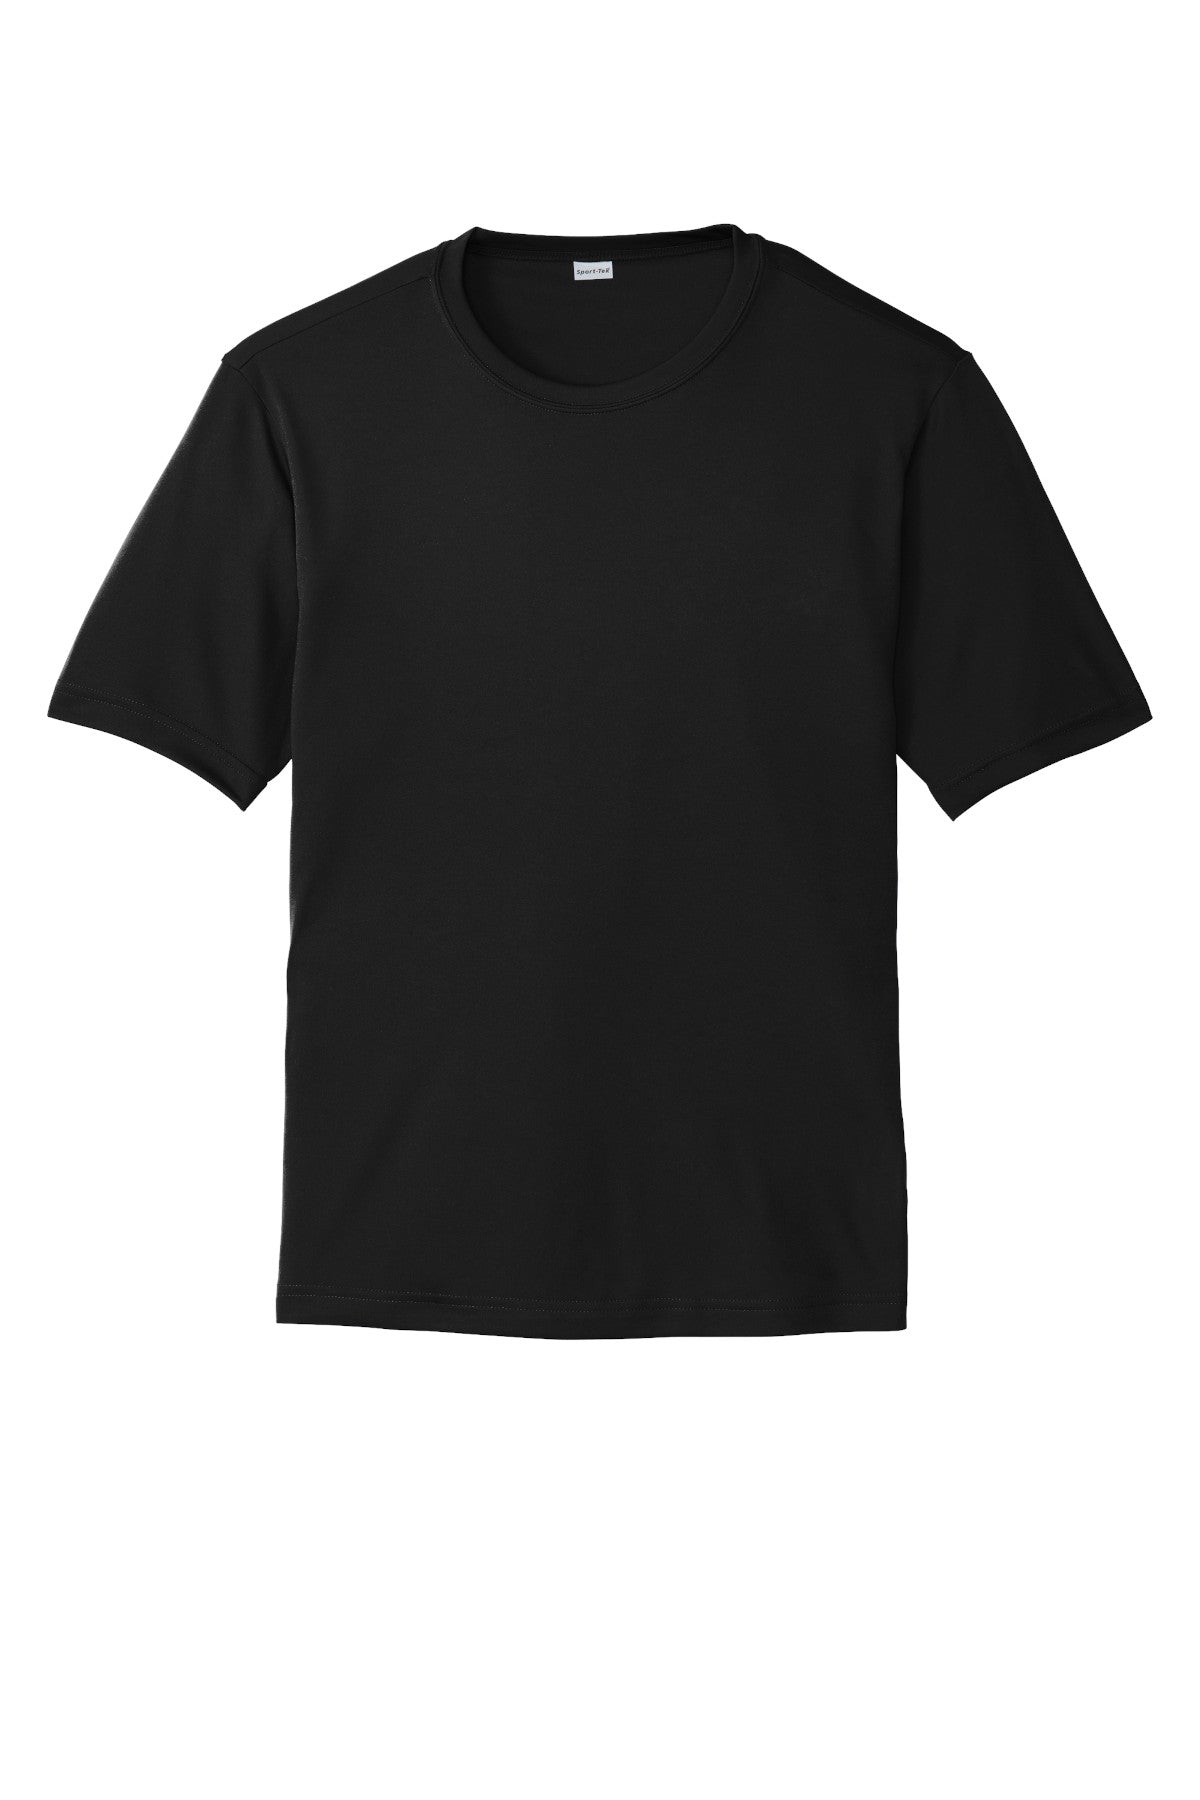 Sport-Tek St350 Polyester Adult T-Shirt Ad Small / Black